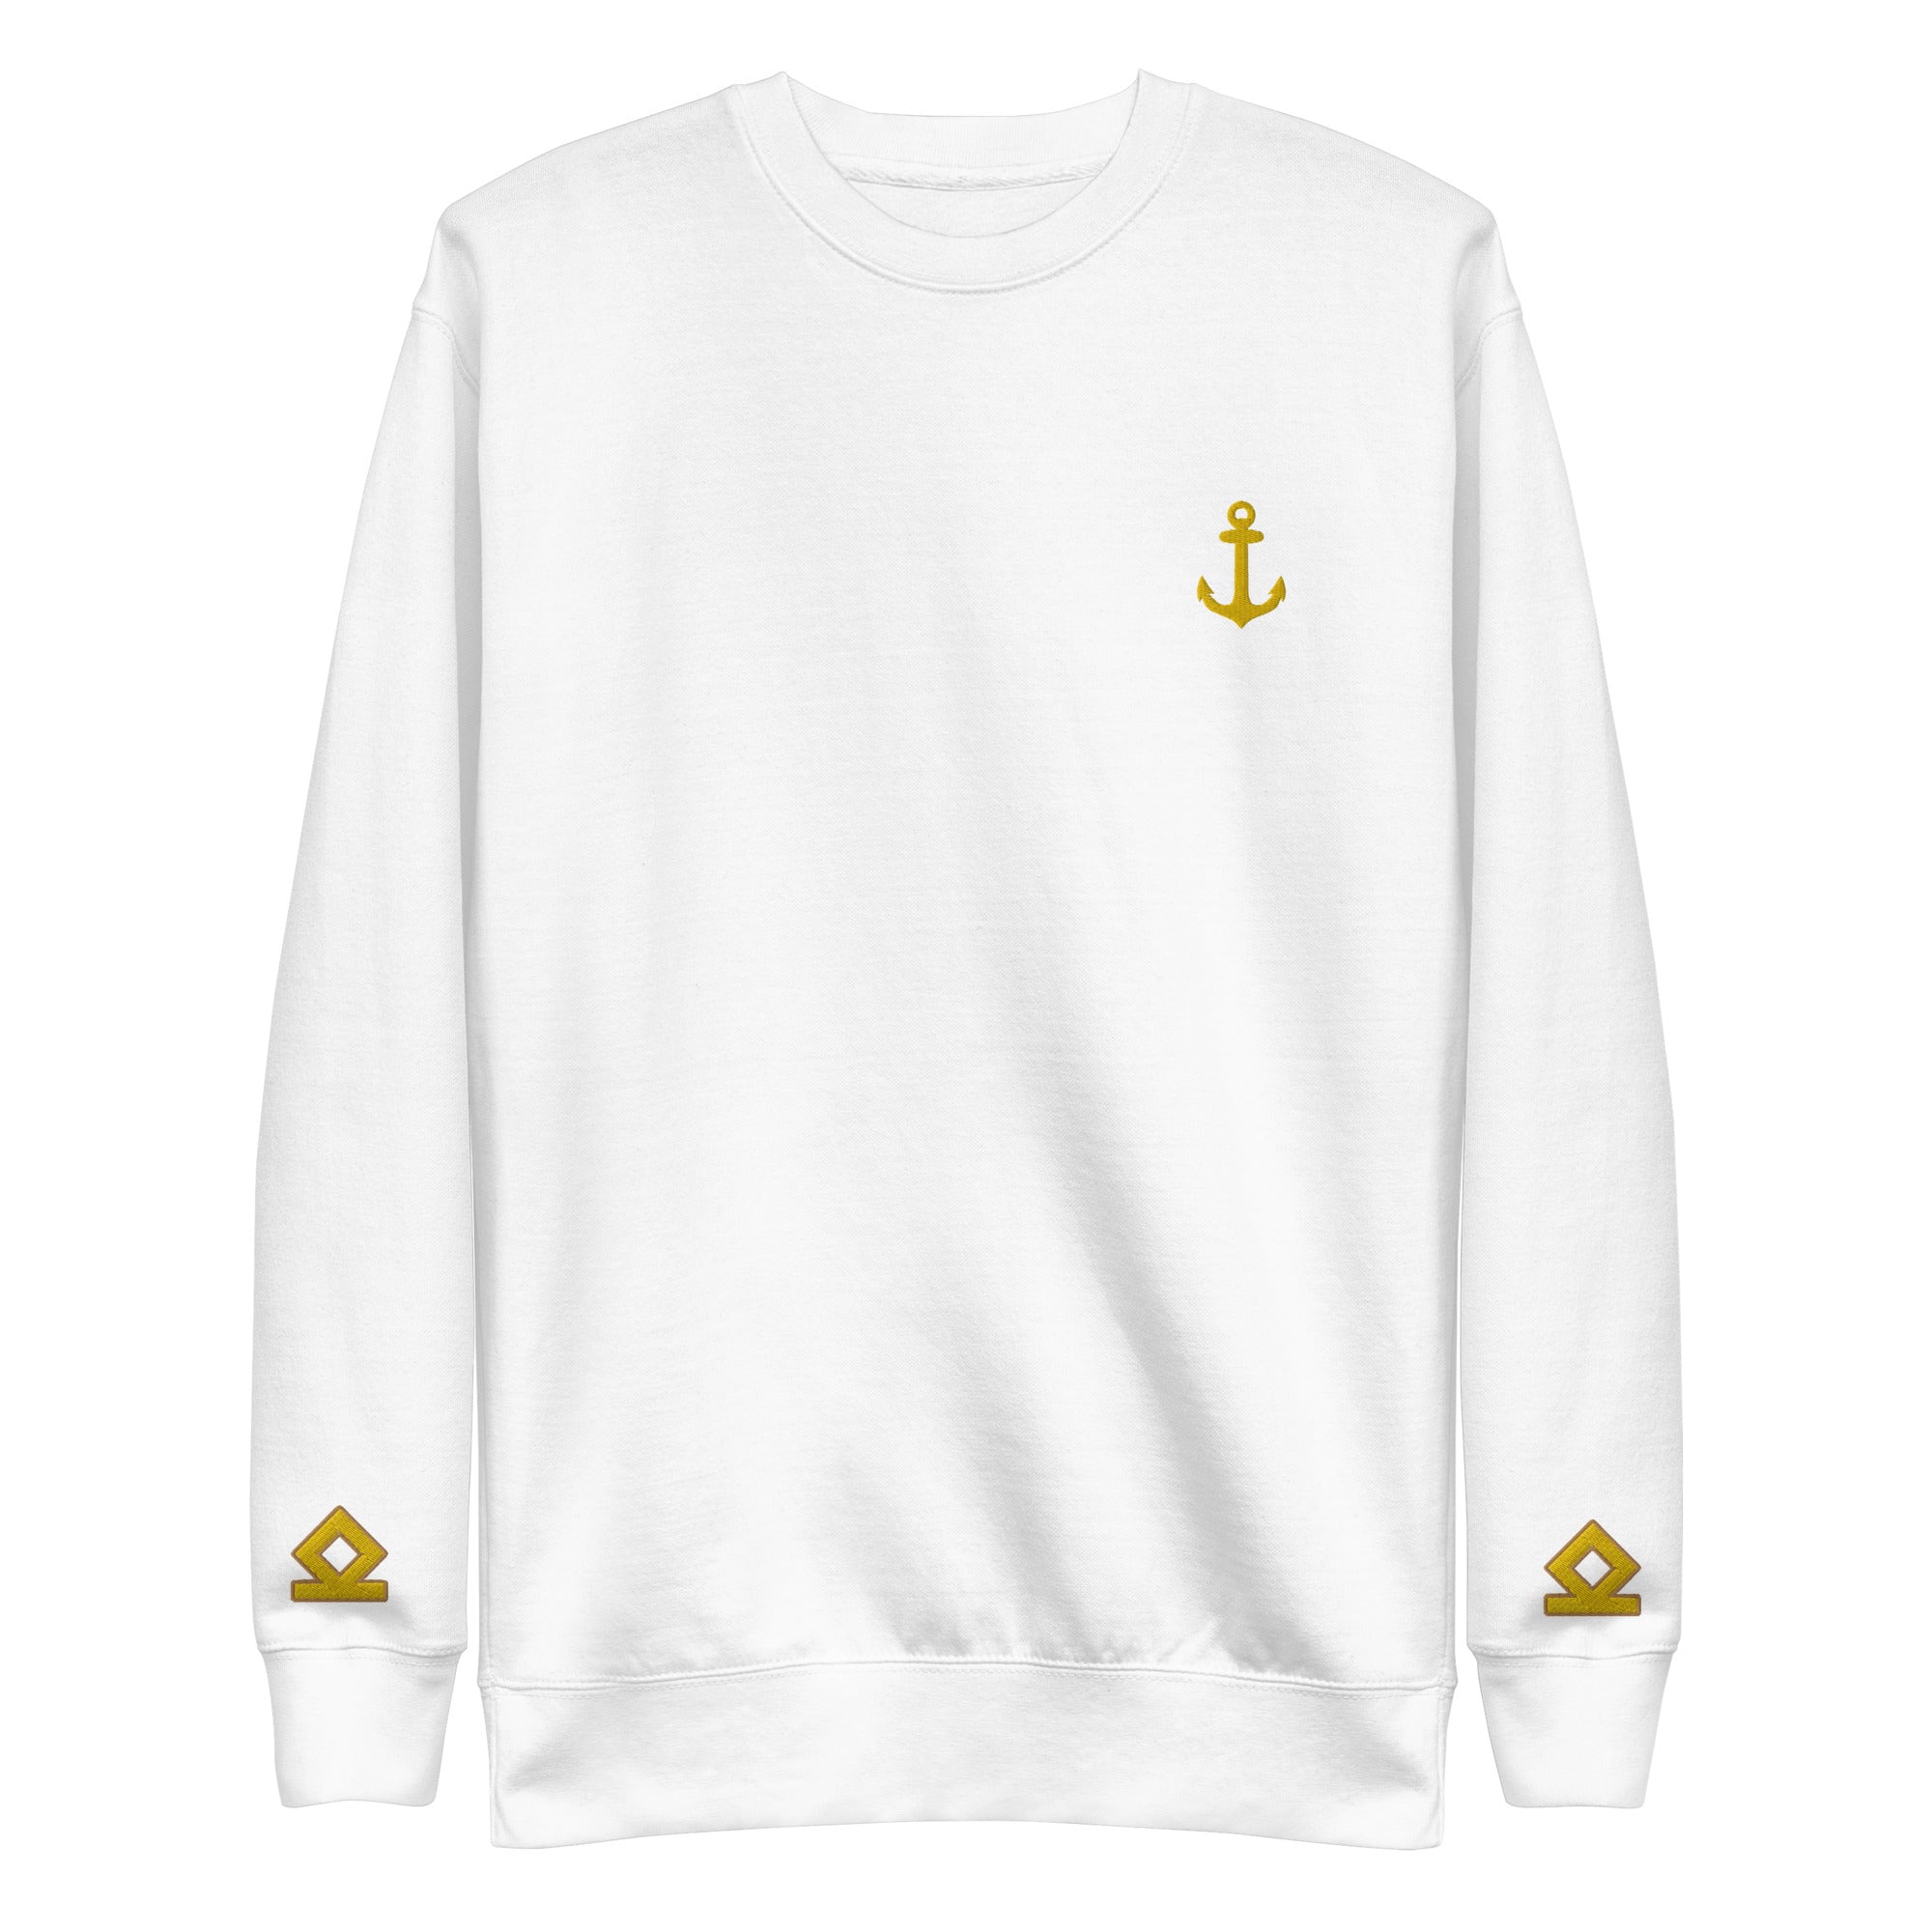 Premium Sweatshirt with Anchor and epaulettes